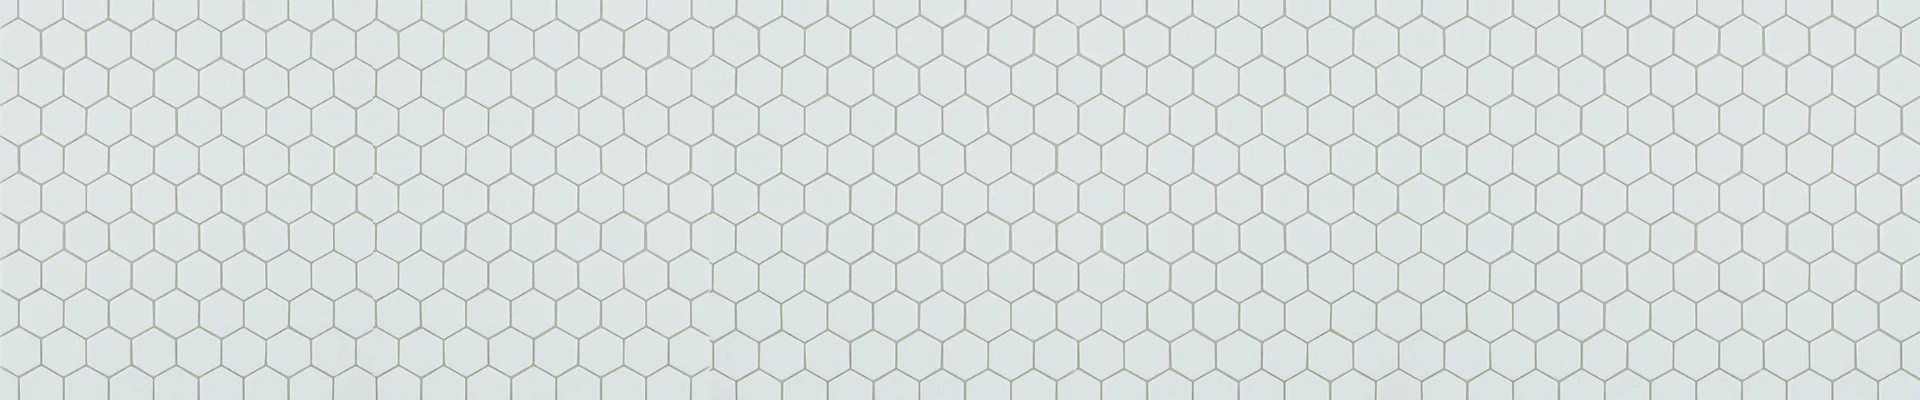 gresite hexagonal para piscina blanco